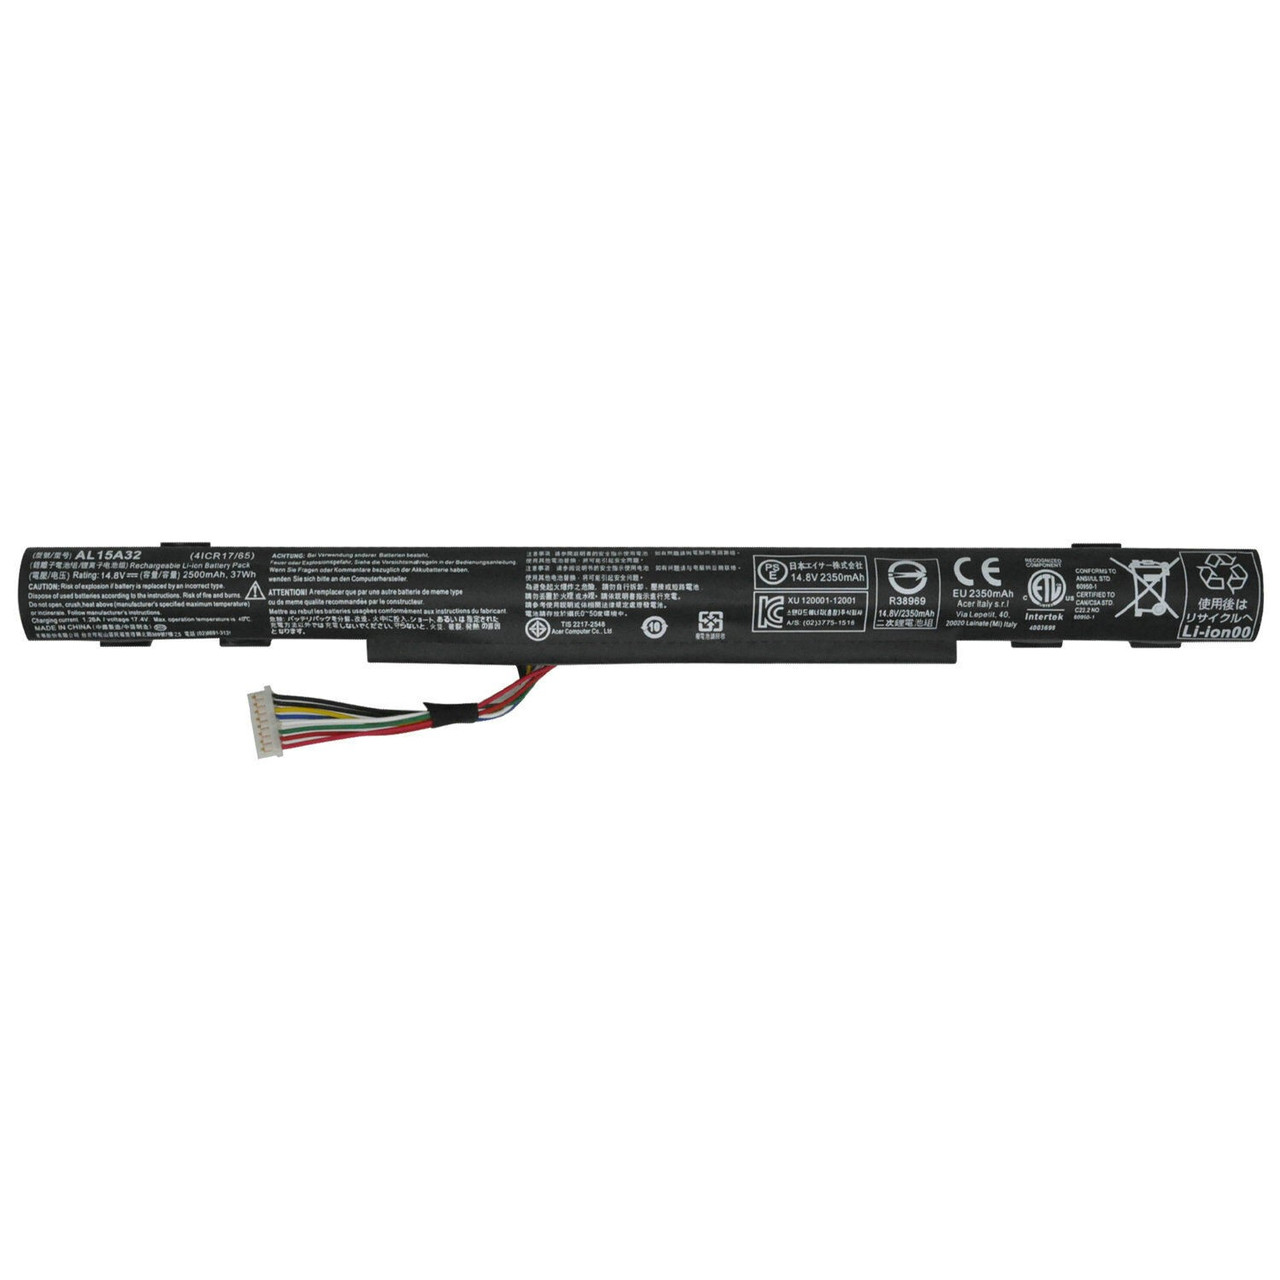 Оригинальная аккумуляторная батарея  AL15A32 для ноутбука Acer Aspire E5-422, E5-472, E5-473, E5-522, E5-532,